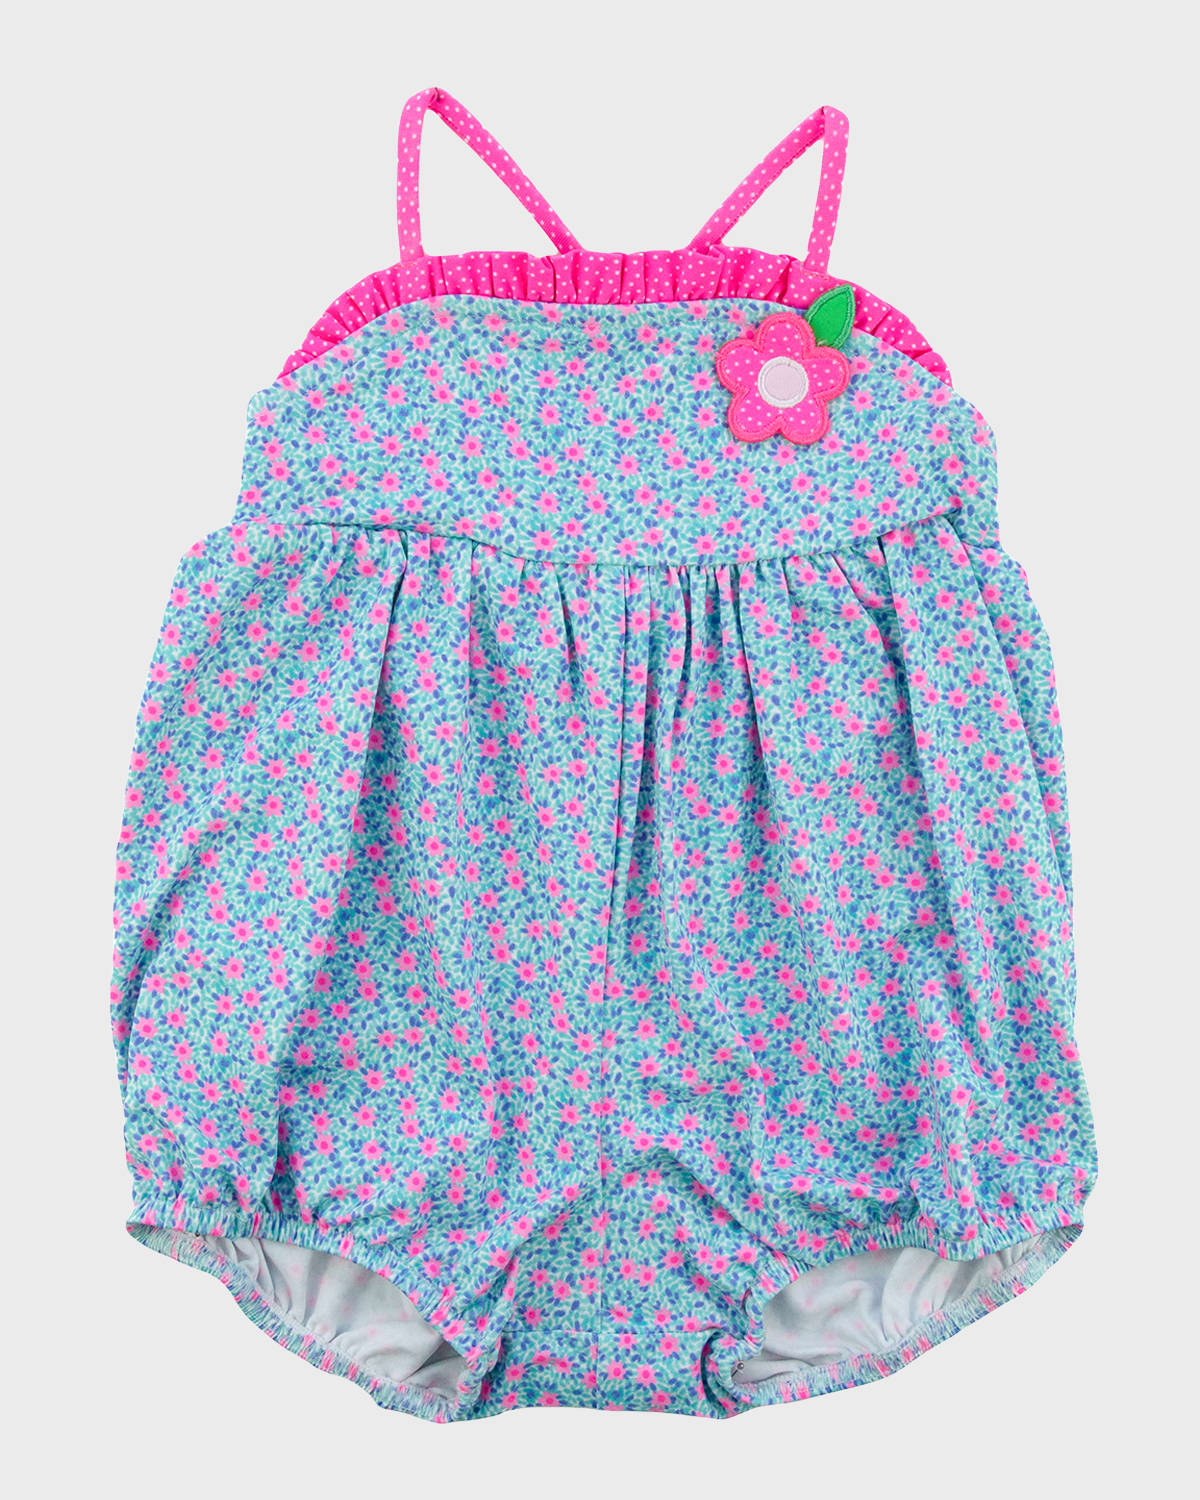 Girl's Daisy-Print Bubble Swimsuit W/ Flowers, Size 6M-24M